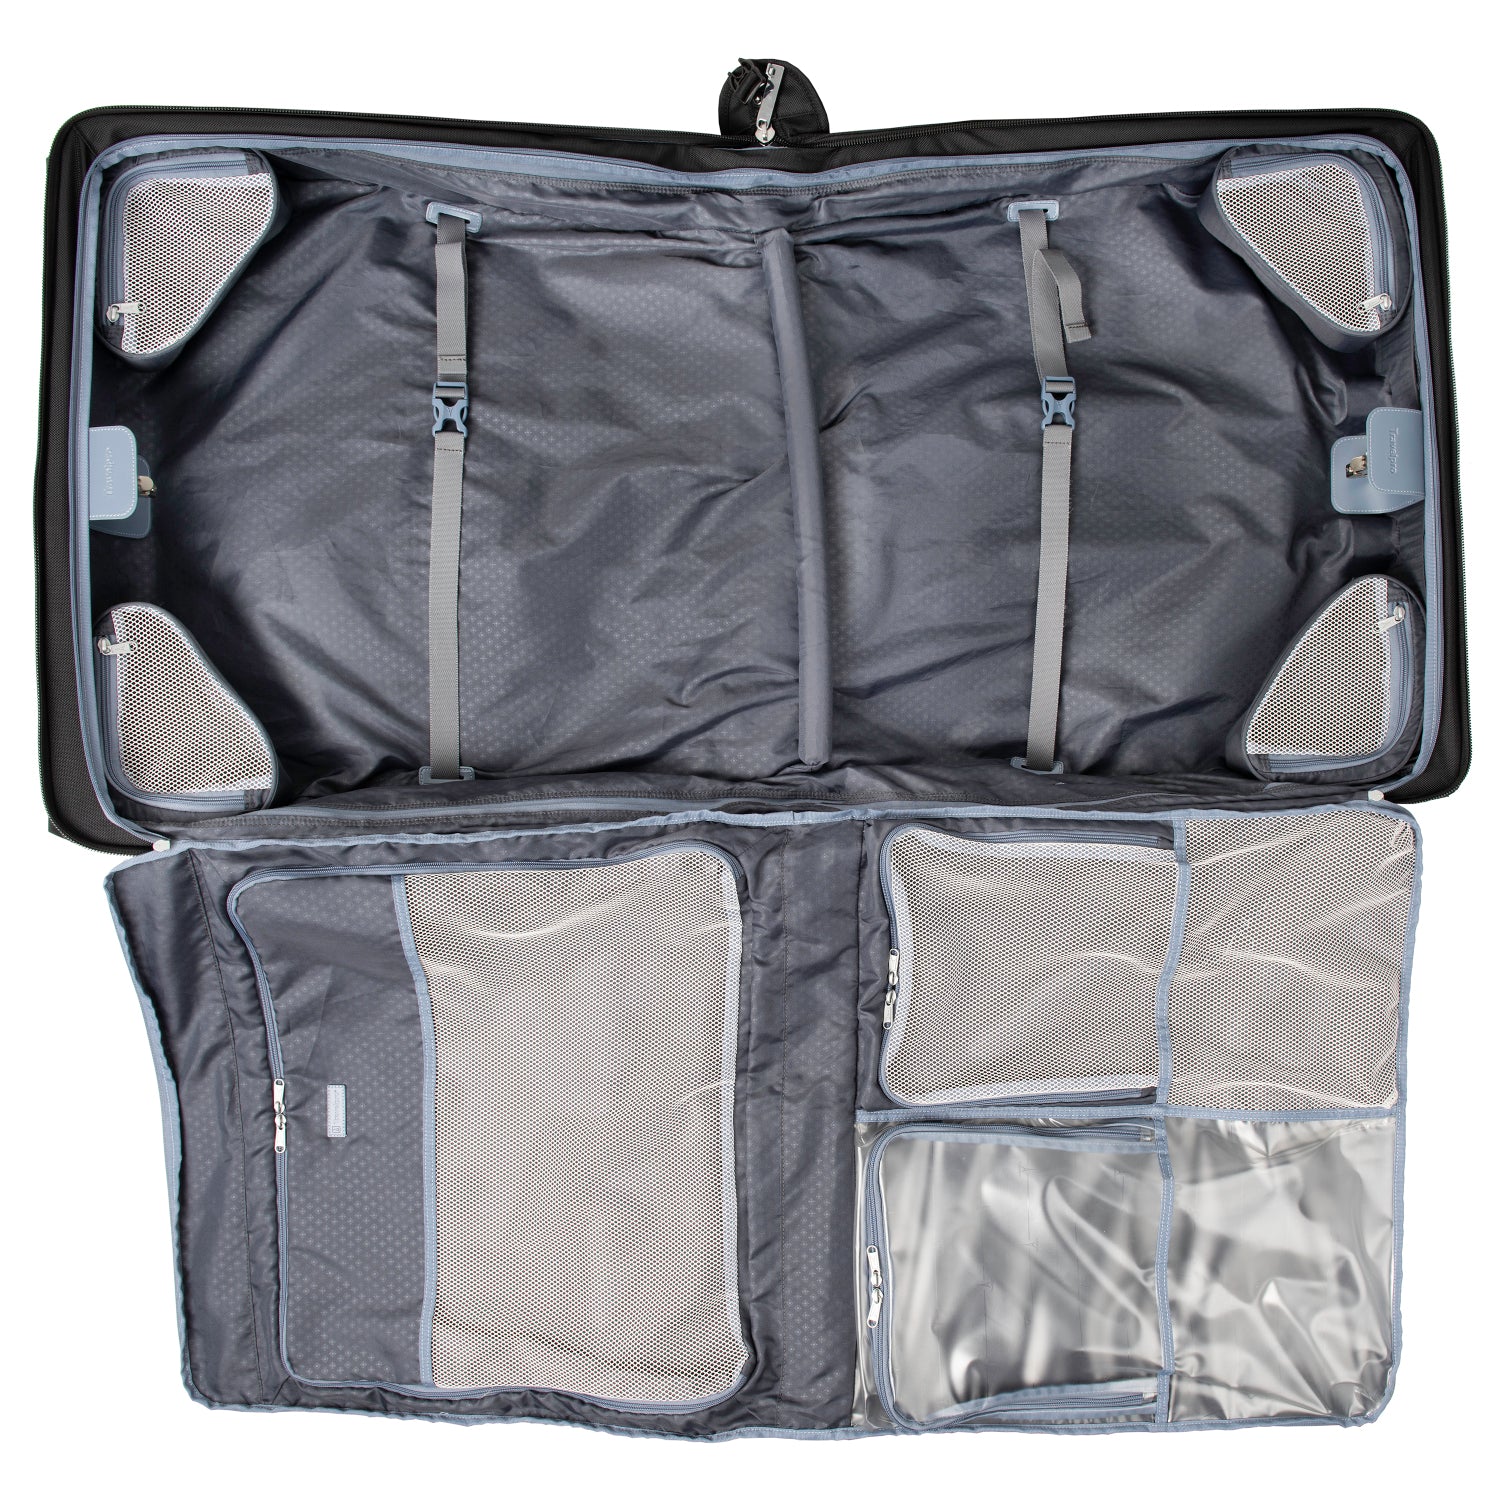 Travelpro Platinum Elite 50” Rolling Garment Bag